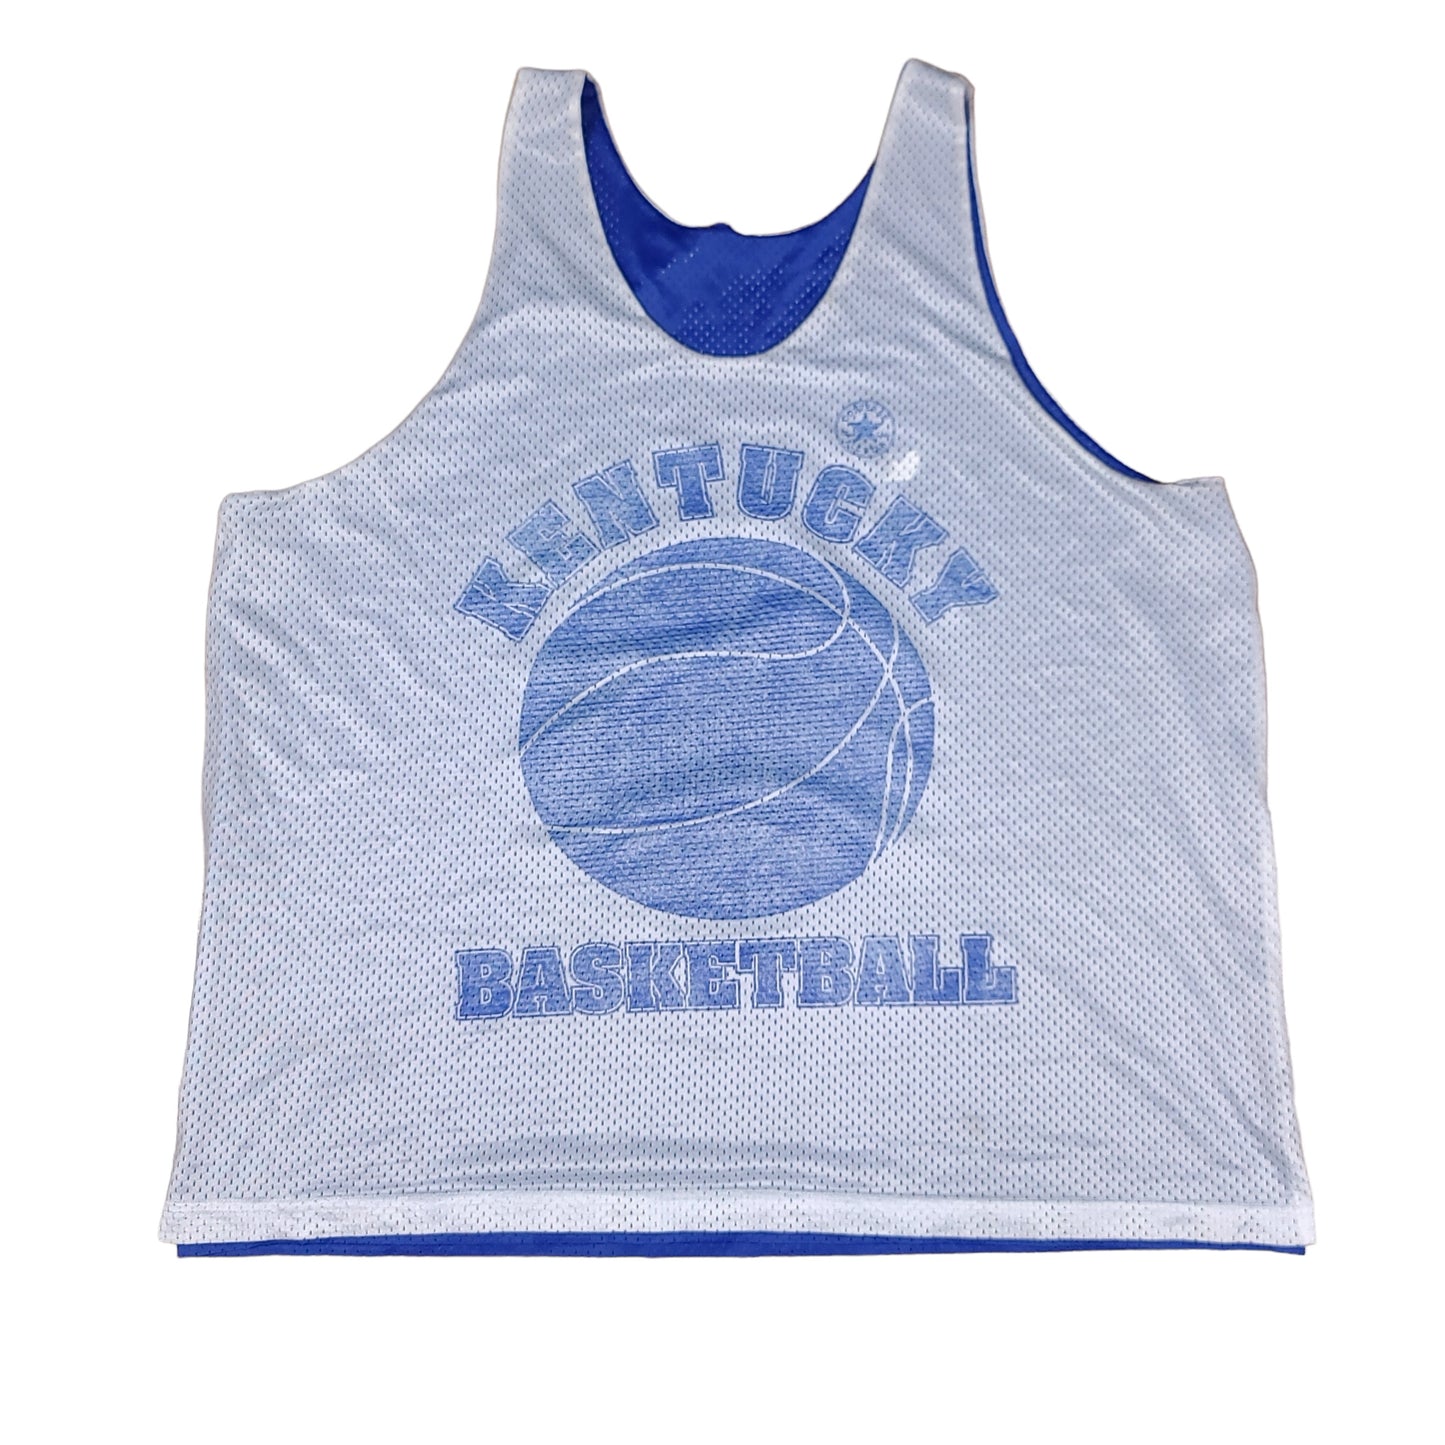 Vintage Kentucky University Basketball Reversible Jersey